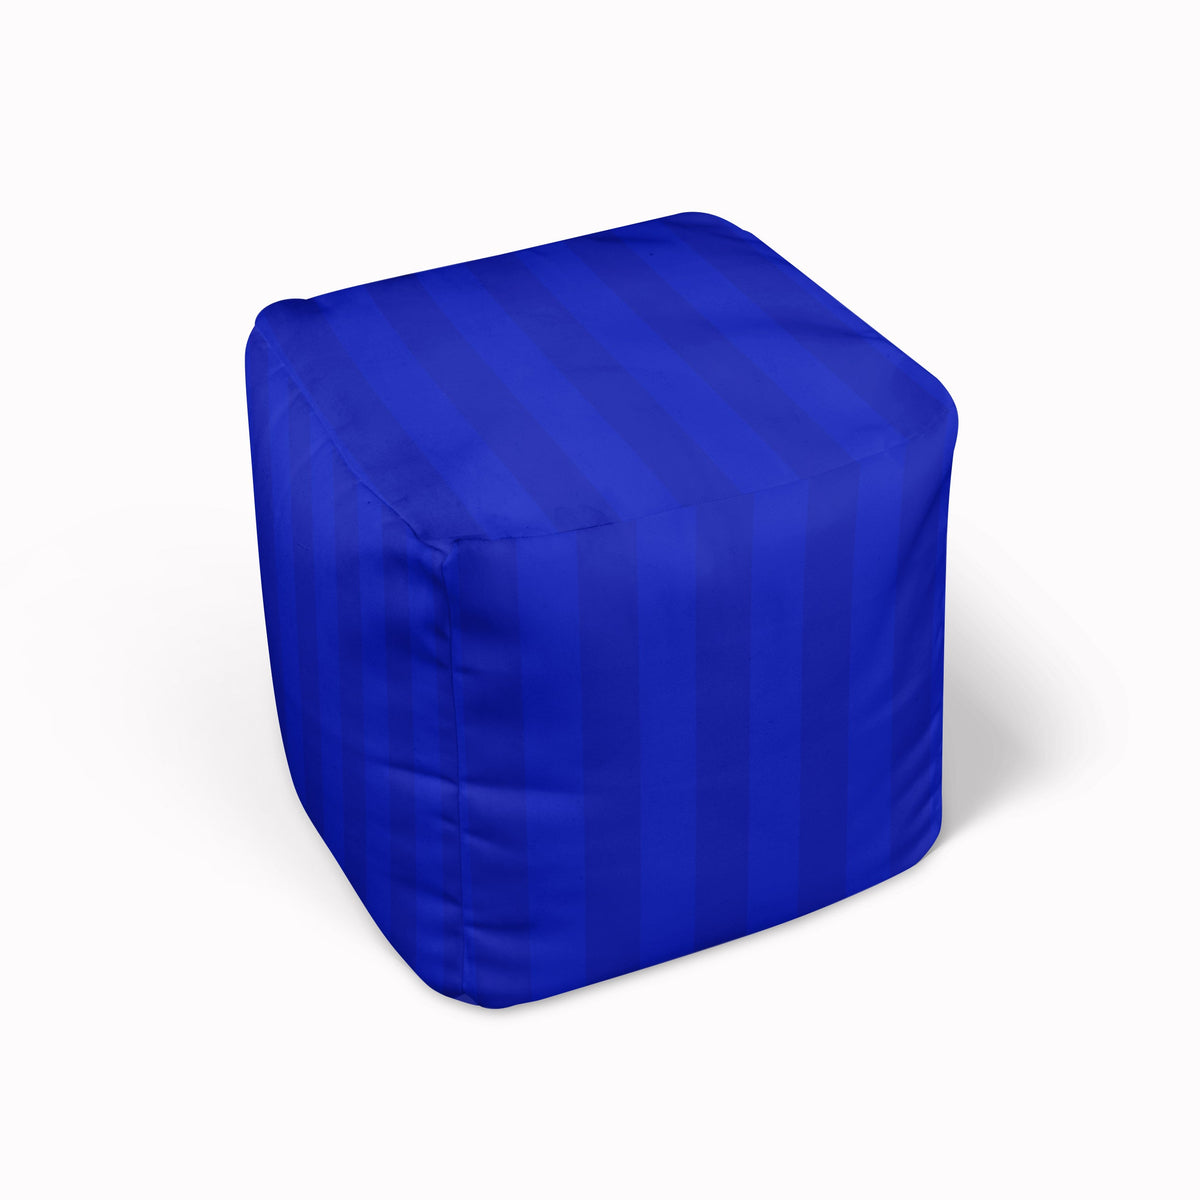 Bean Bag Cube - Shadow Stripes Royal Blue MWW 